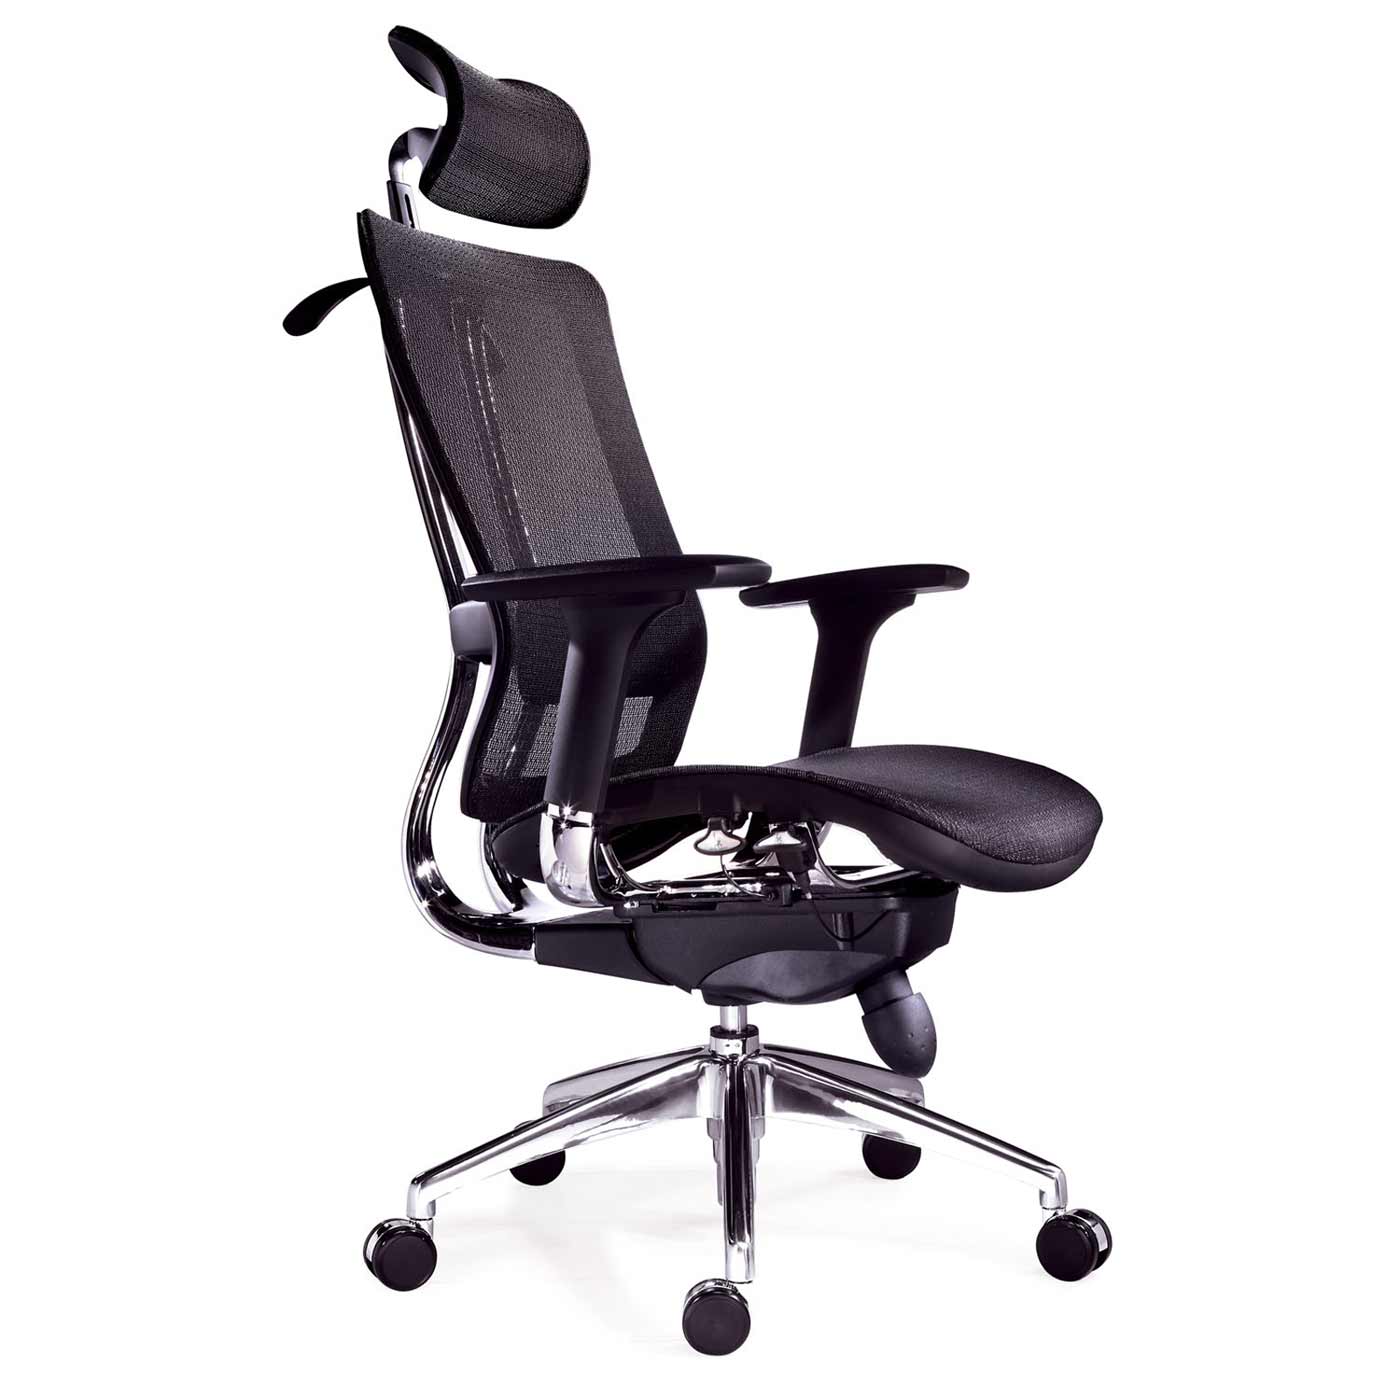 Mesh Ergonomic Chair for Home Office